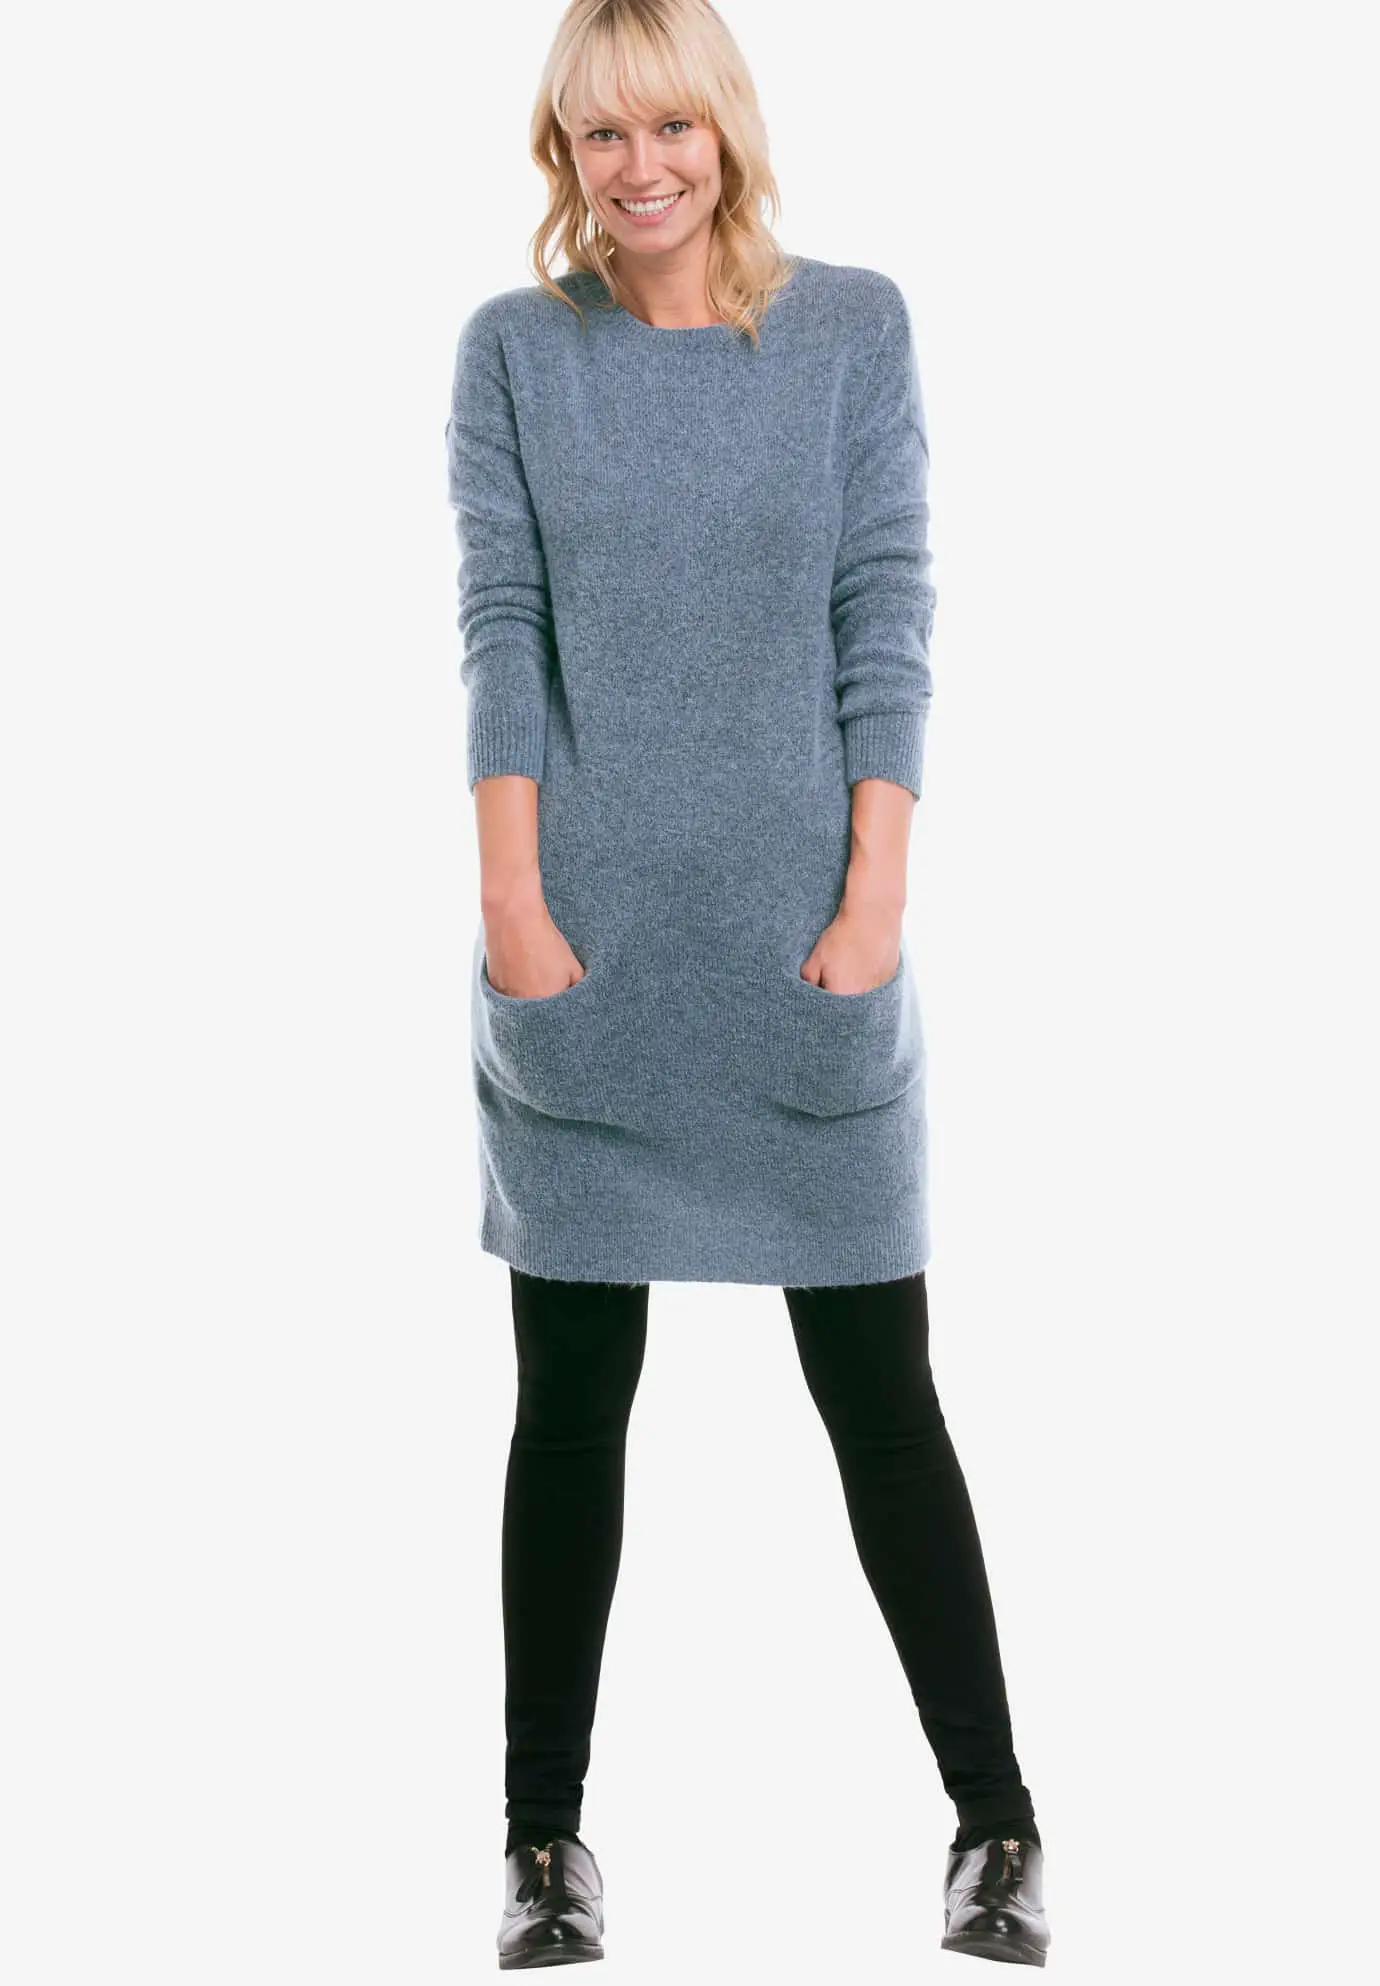 Plus Size Wool Sweater 05